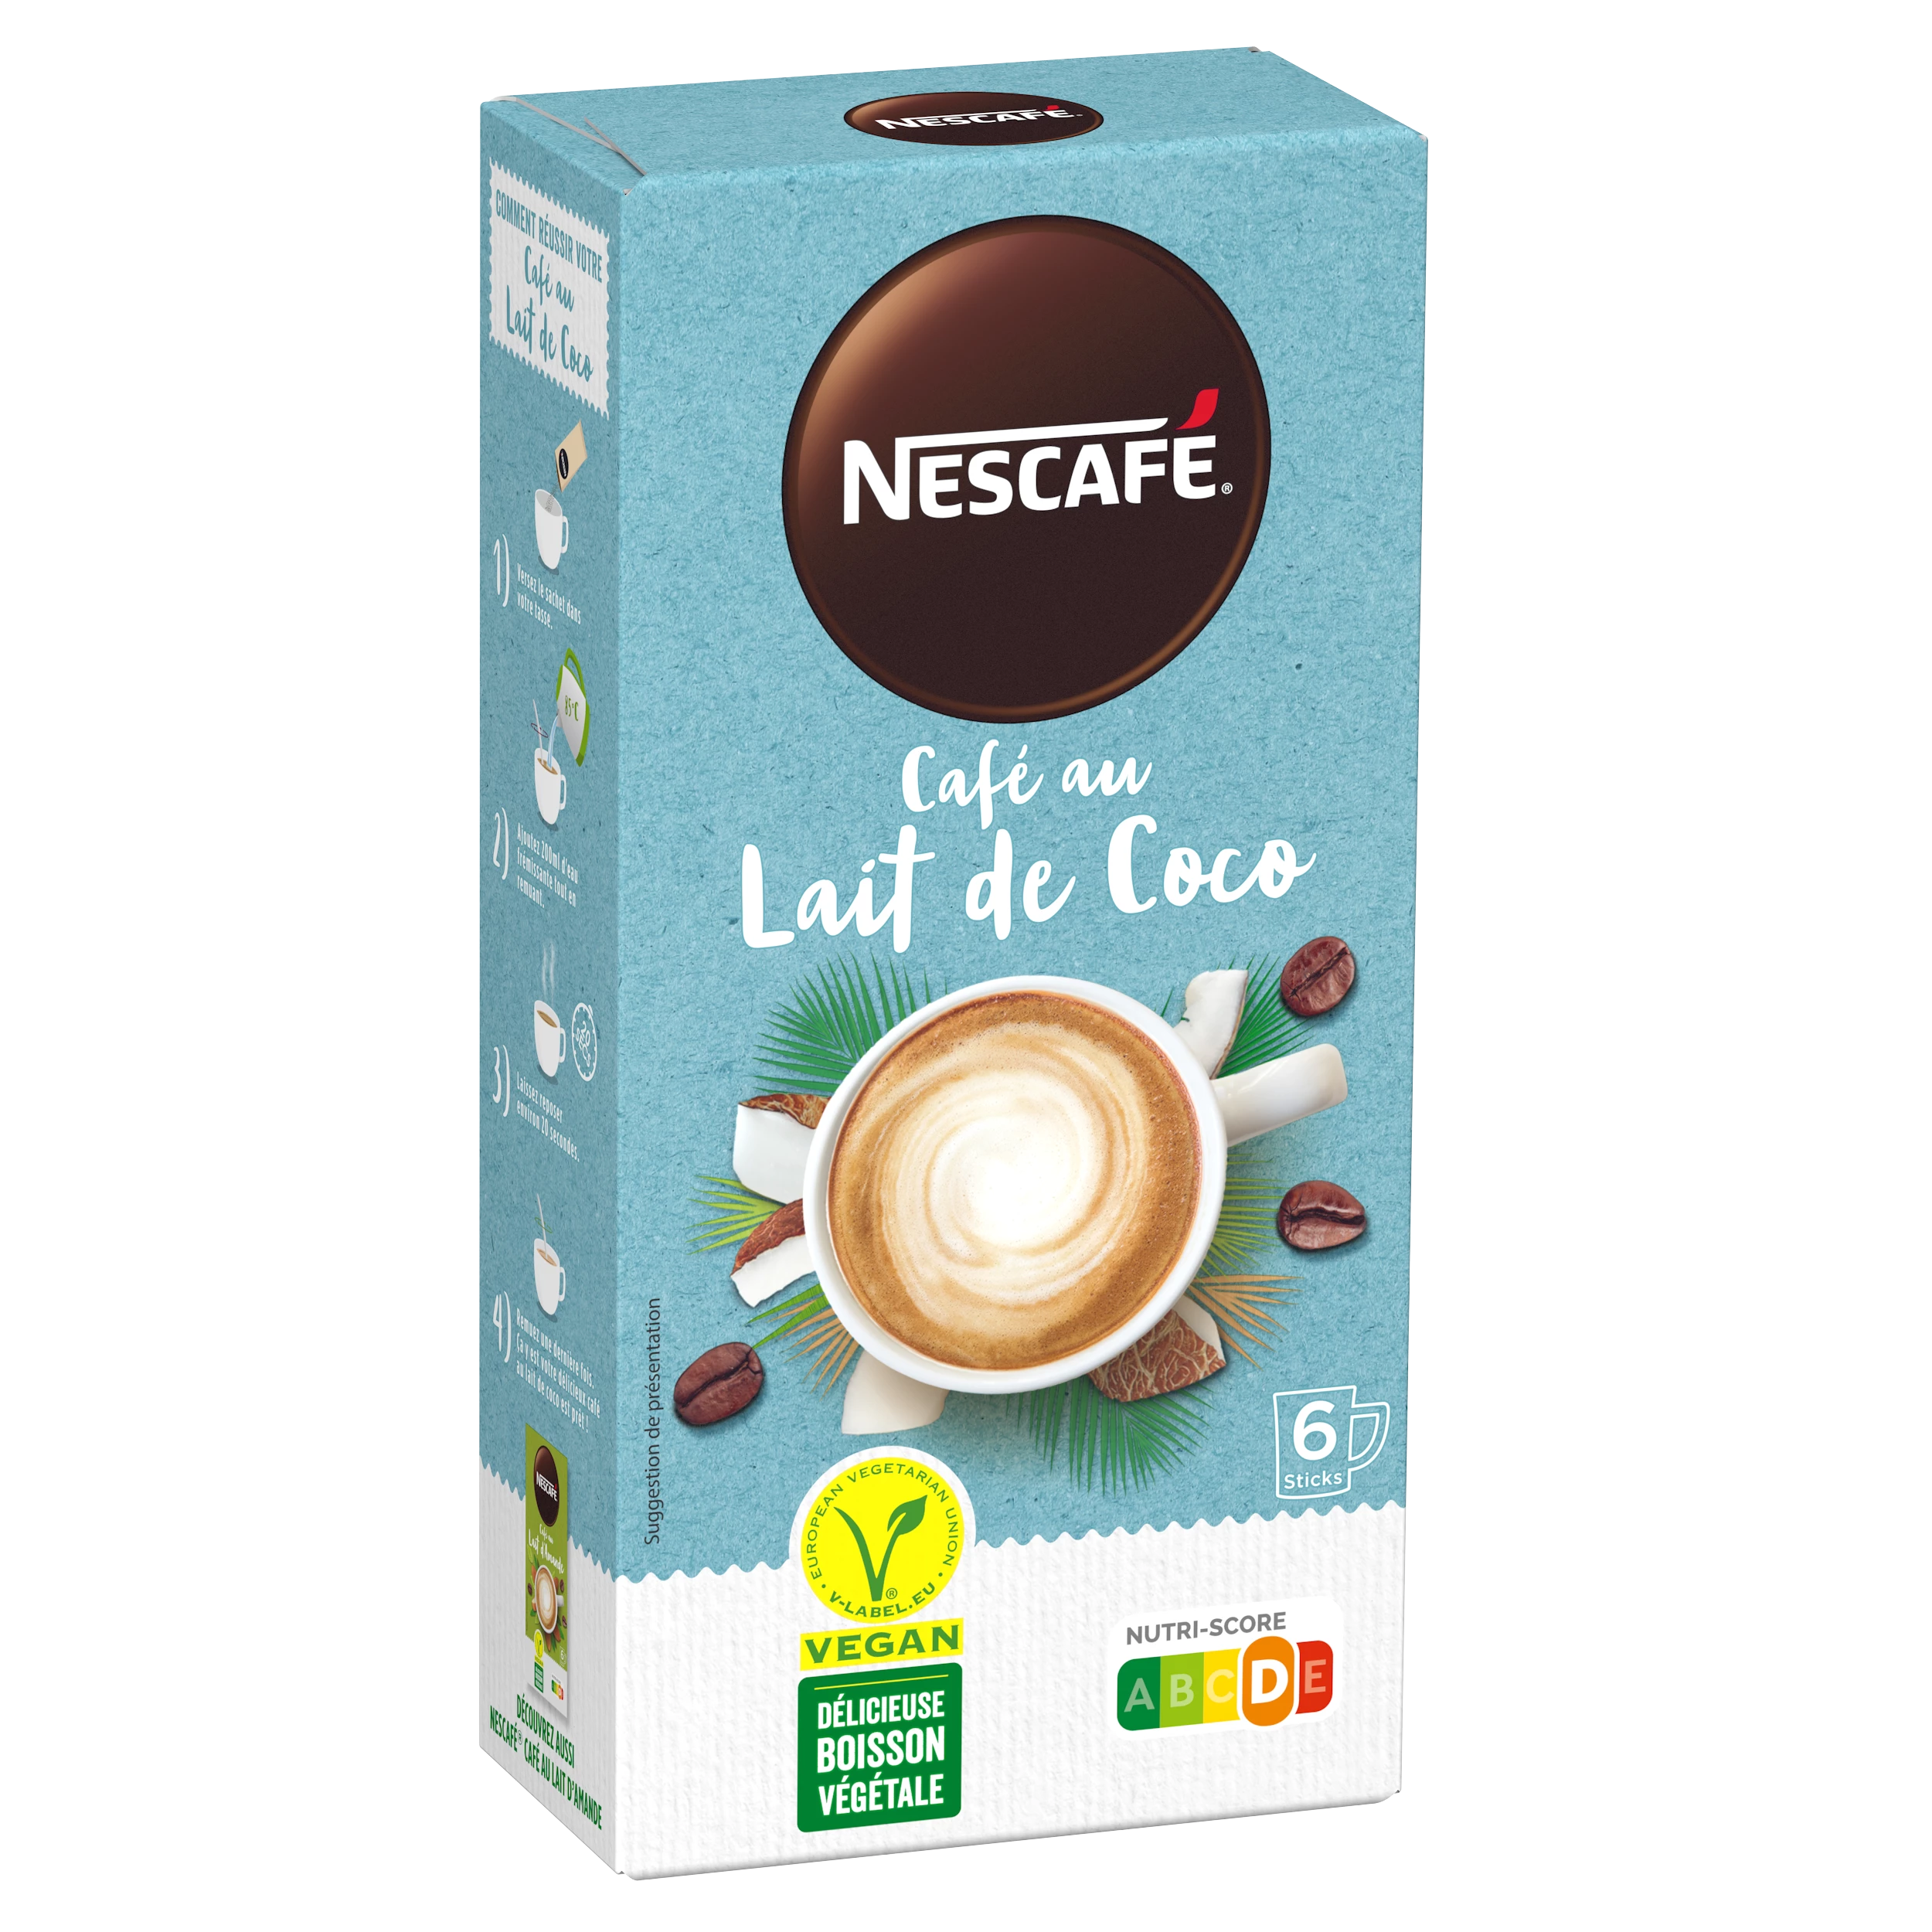 Coconut milk coffee - NESCAFE